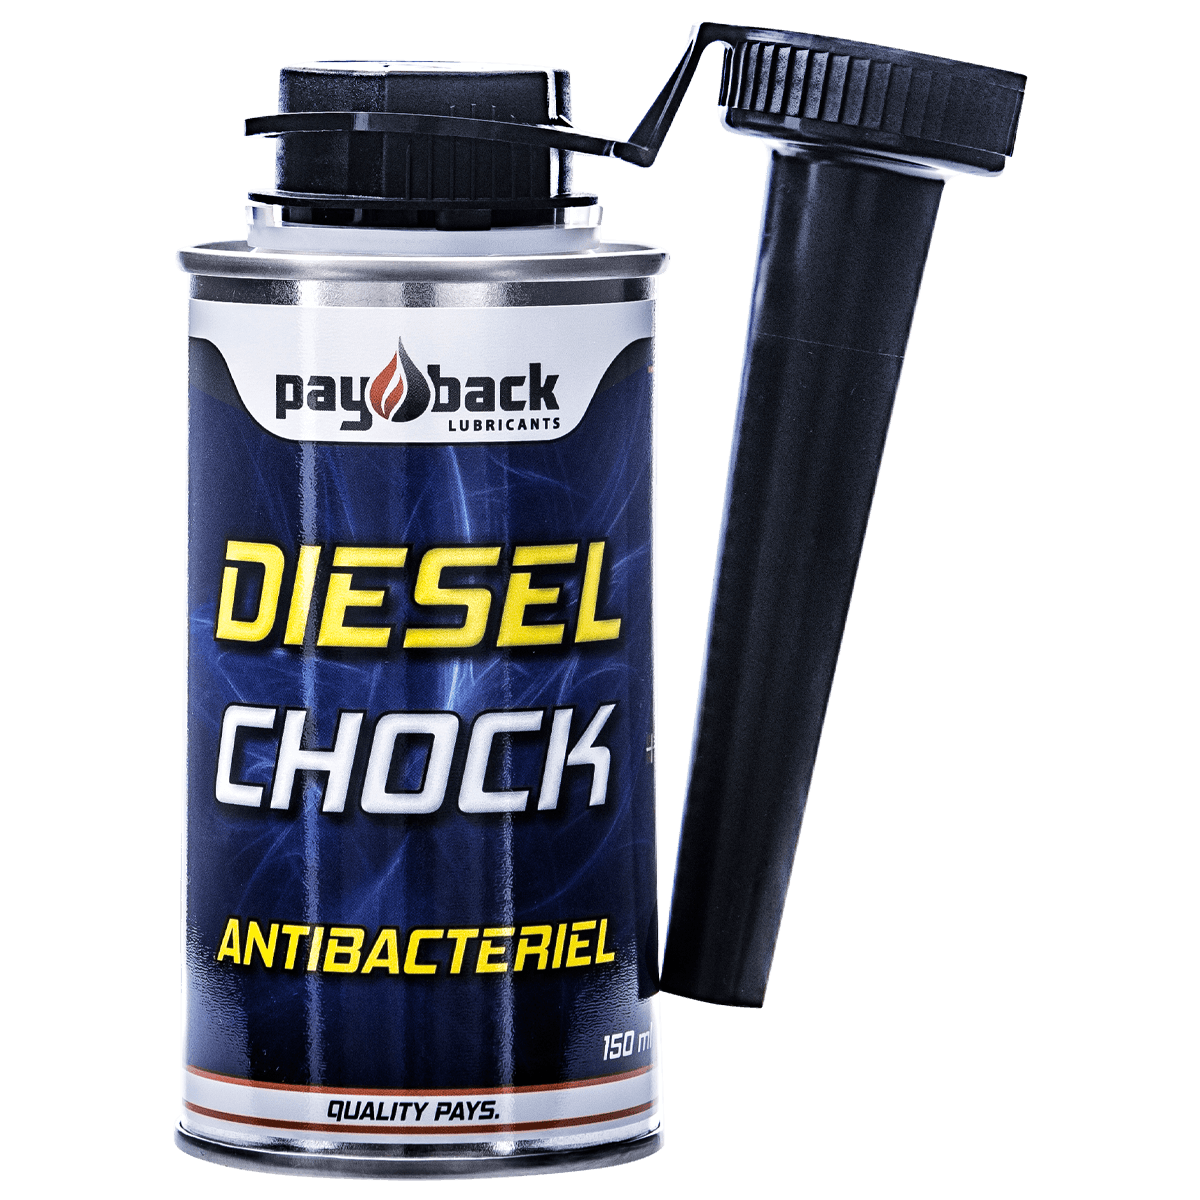 Payback #480 Diesel Chock "BAKTERIEDÖDARE" 150ml